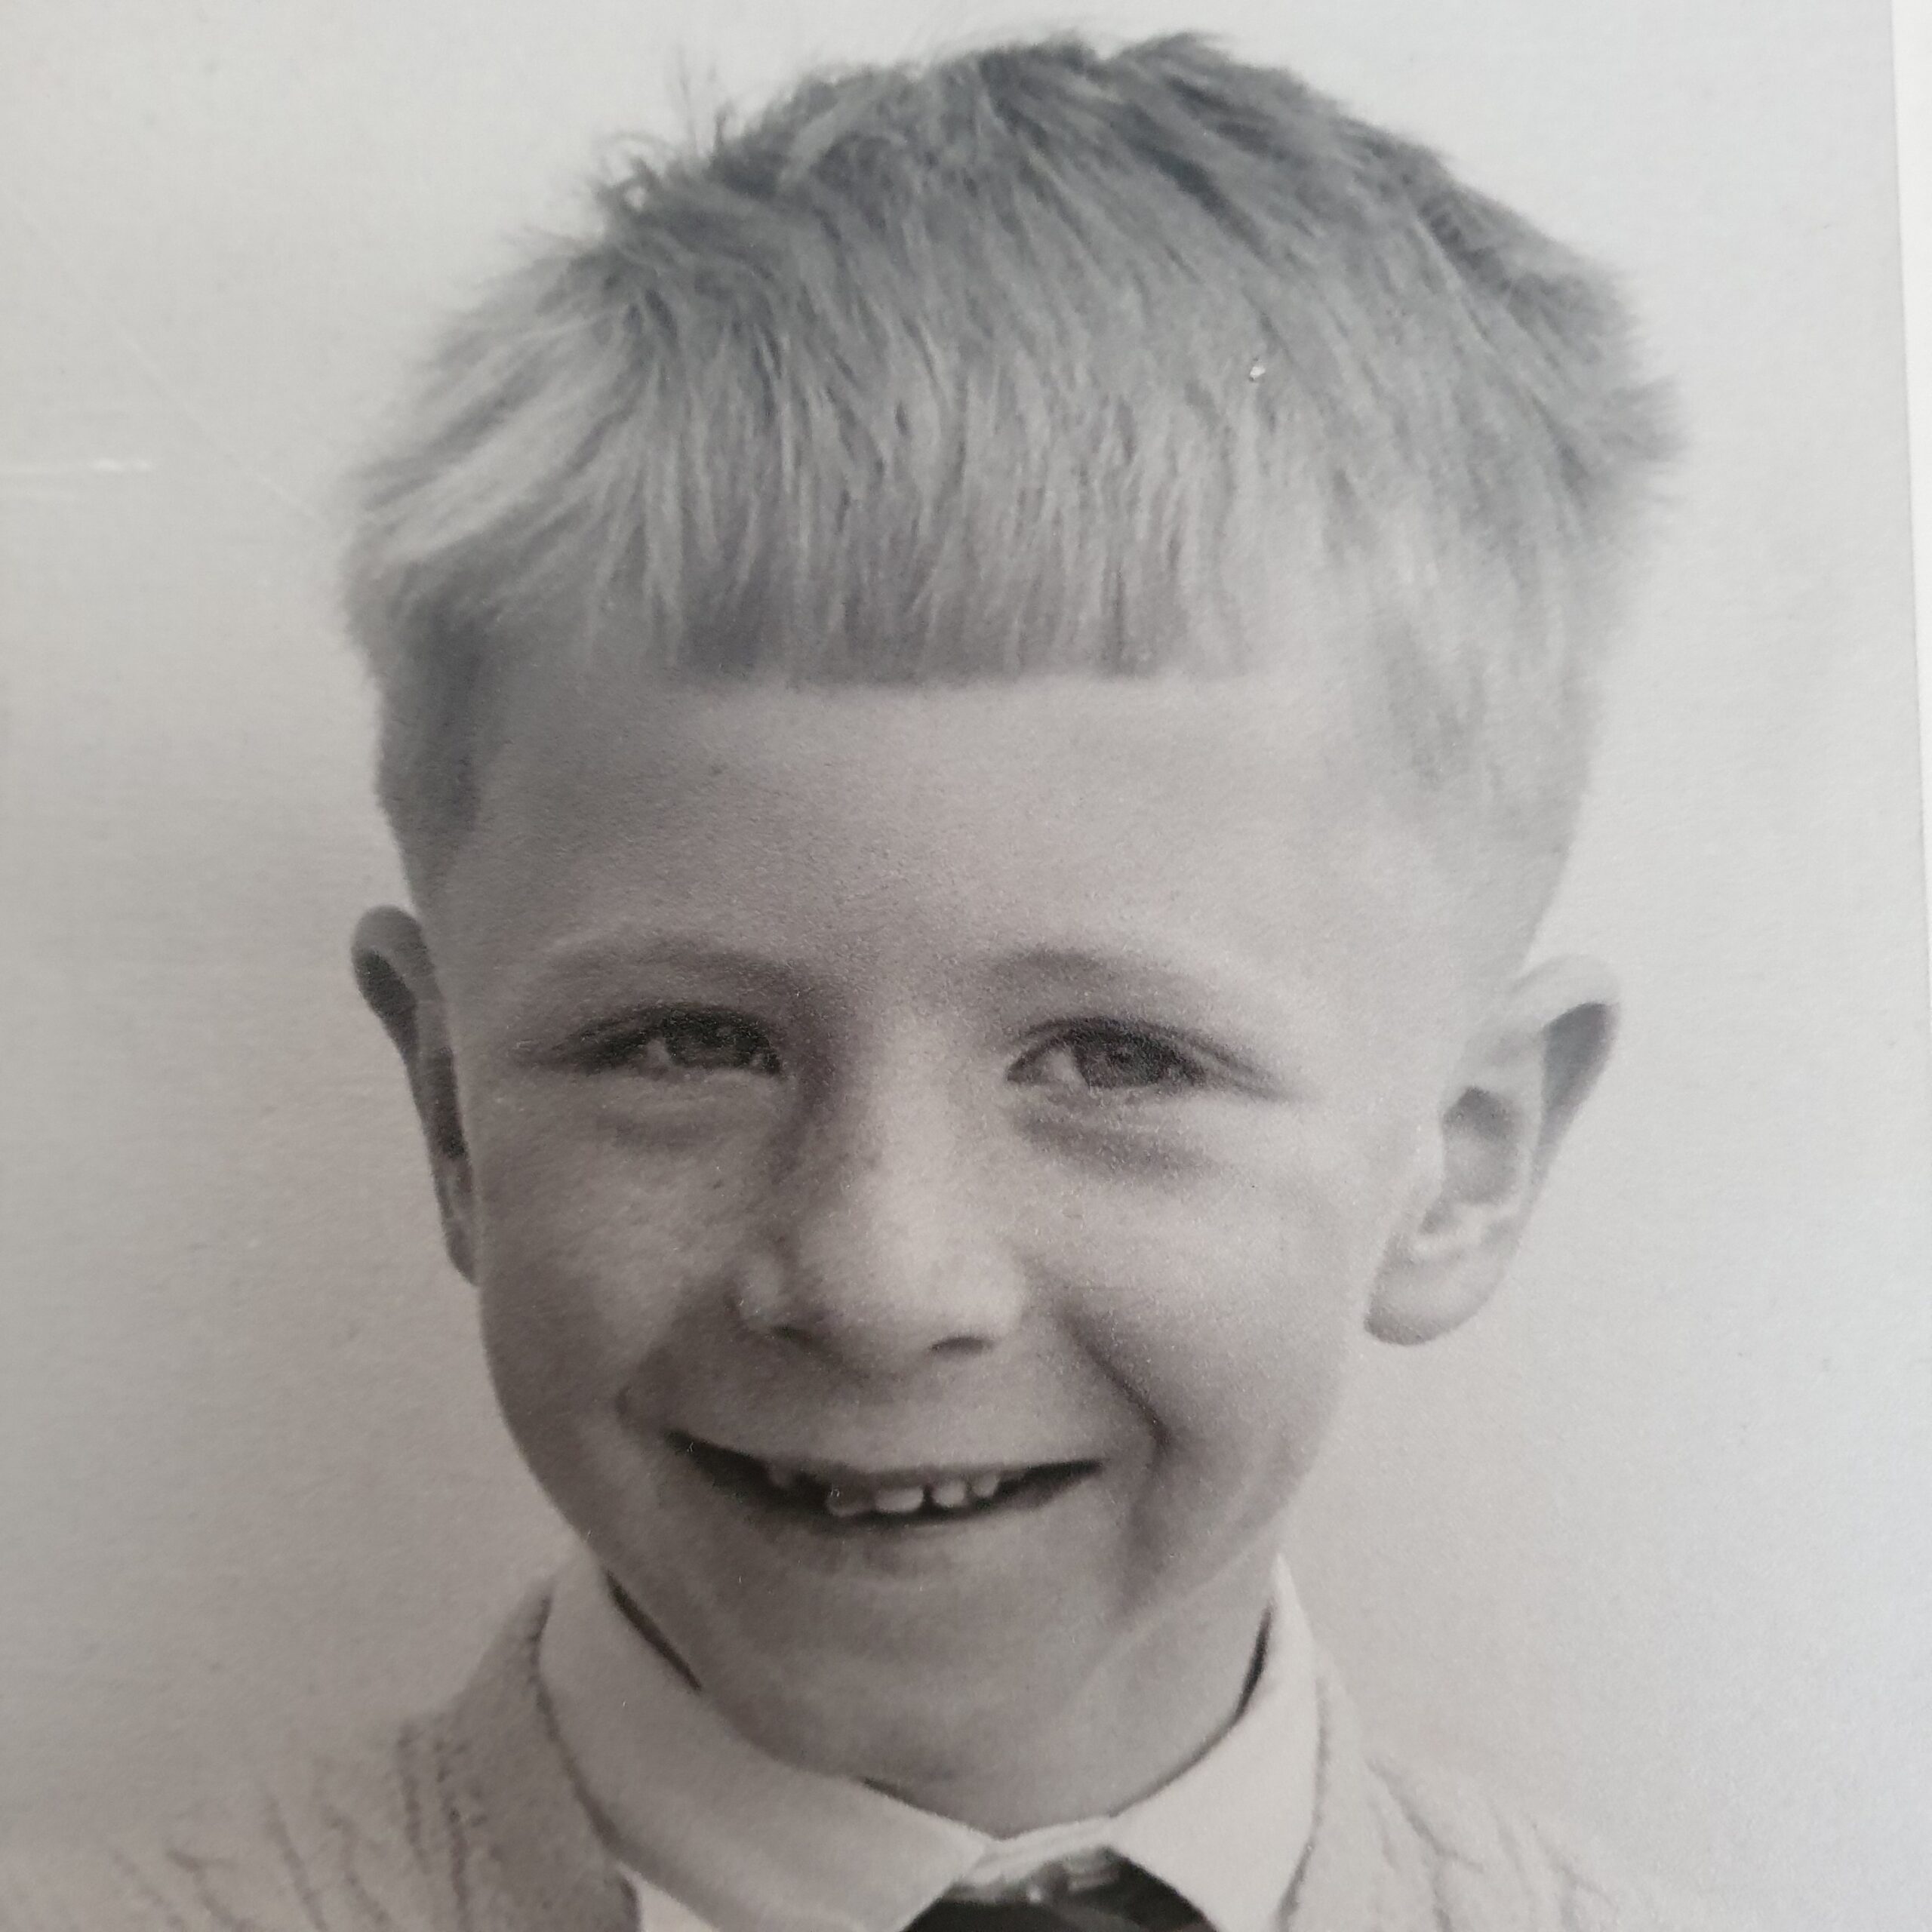 John aged around 8 - a black and white photo.